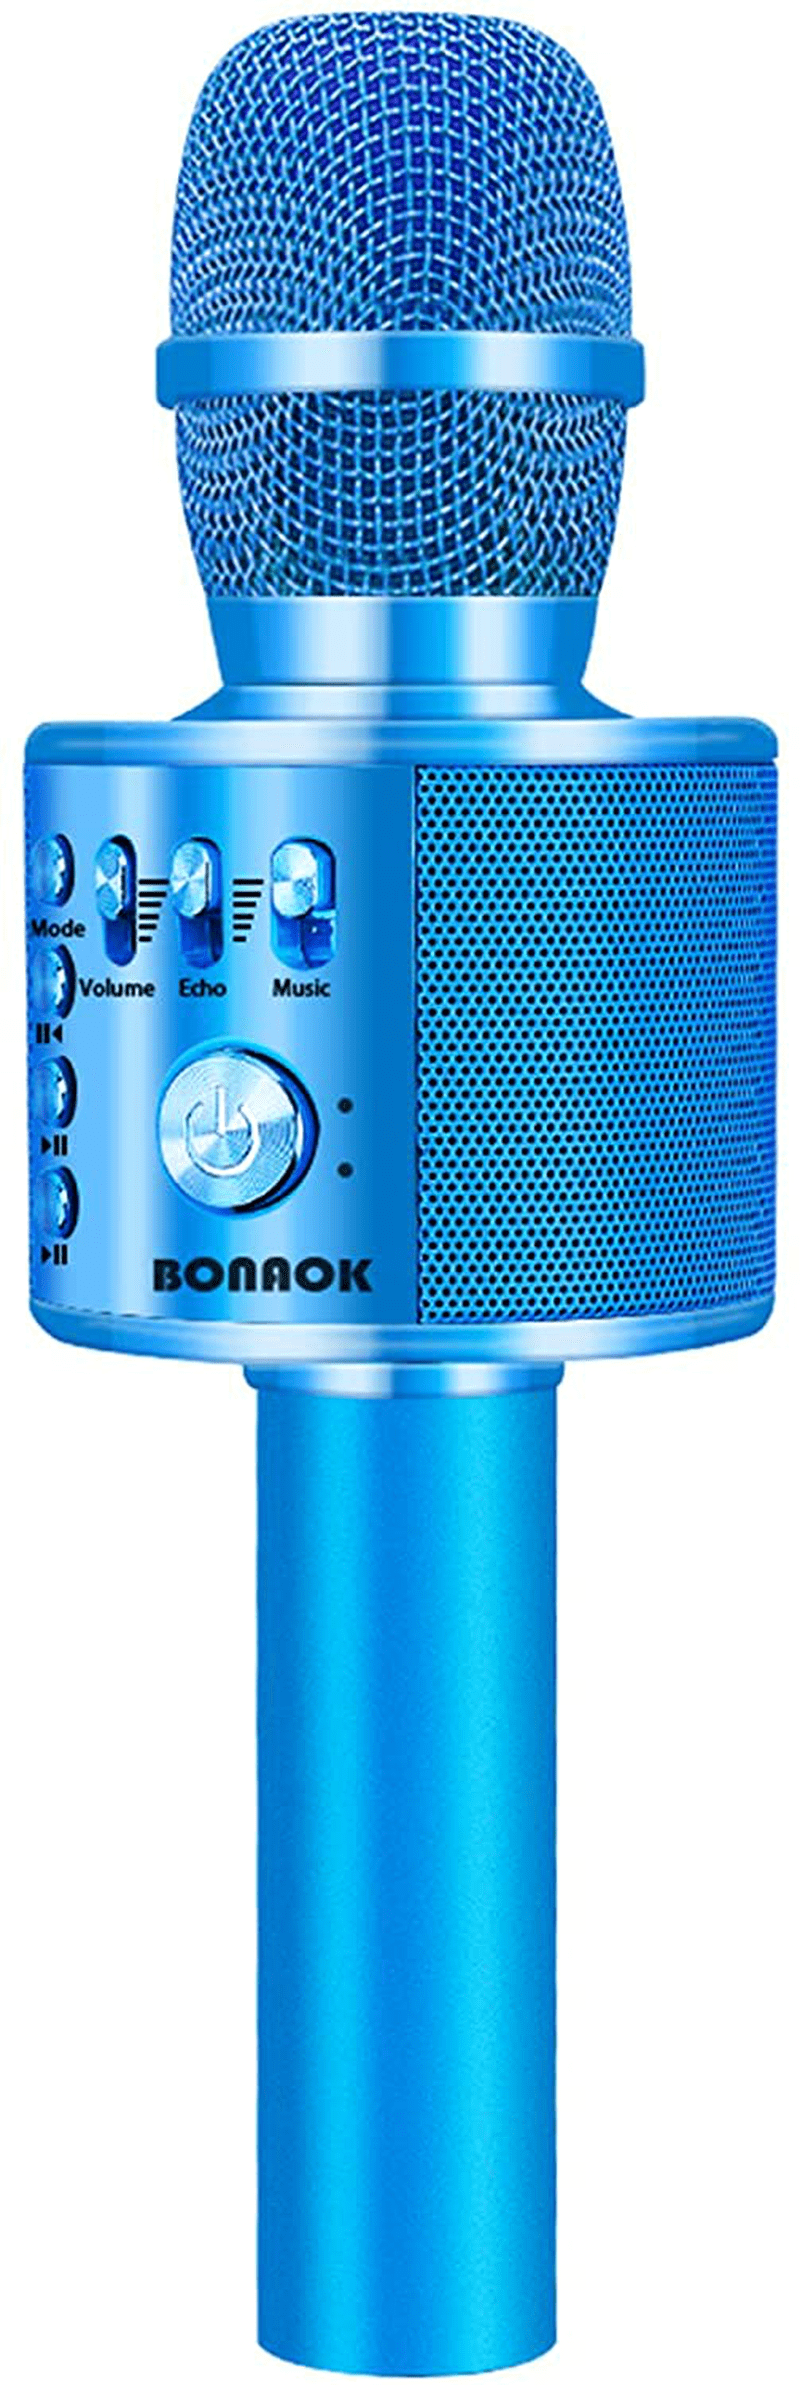 BONAOK Wireless Bluetooth Karaoke Microphone,3-in-1 Portable Handheld Karaoke Mic Speaker Machine Home Party Birthday for All Smartphones PC(Q37 Rose Gold) Electronics > Audio > Audio Components > Microphones BONAOK blue  